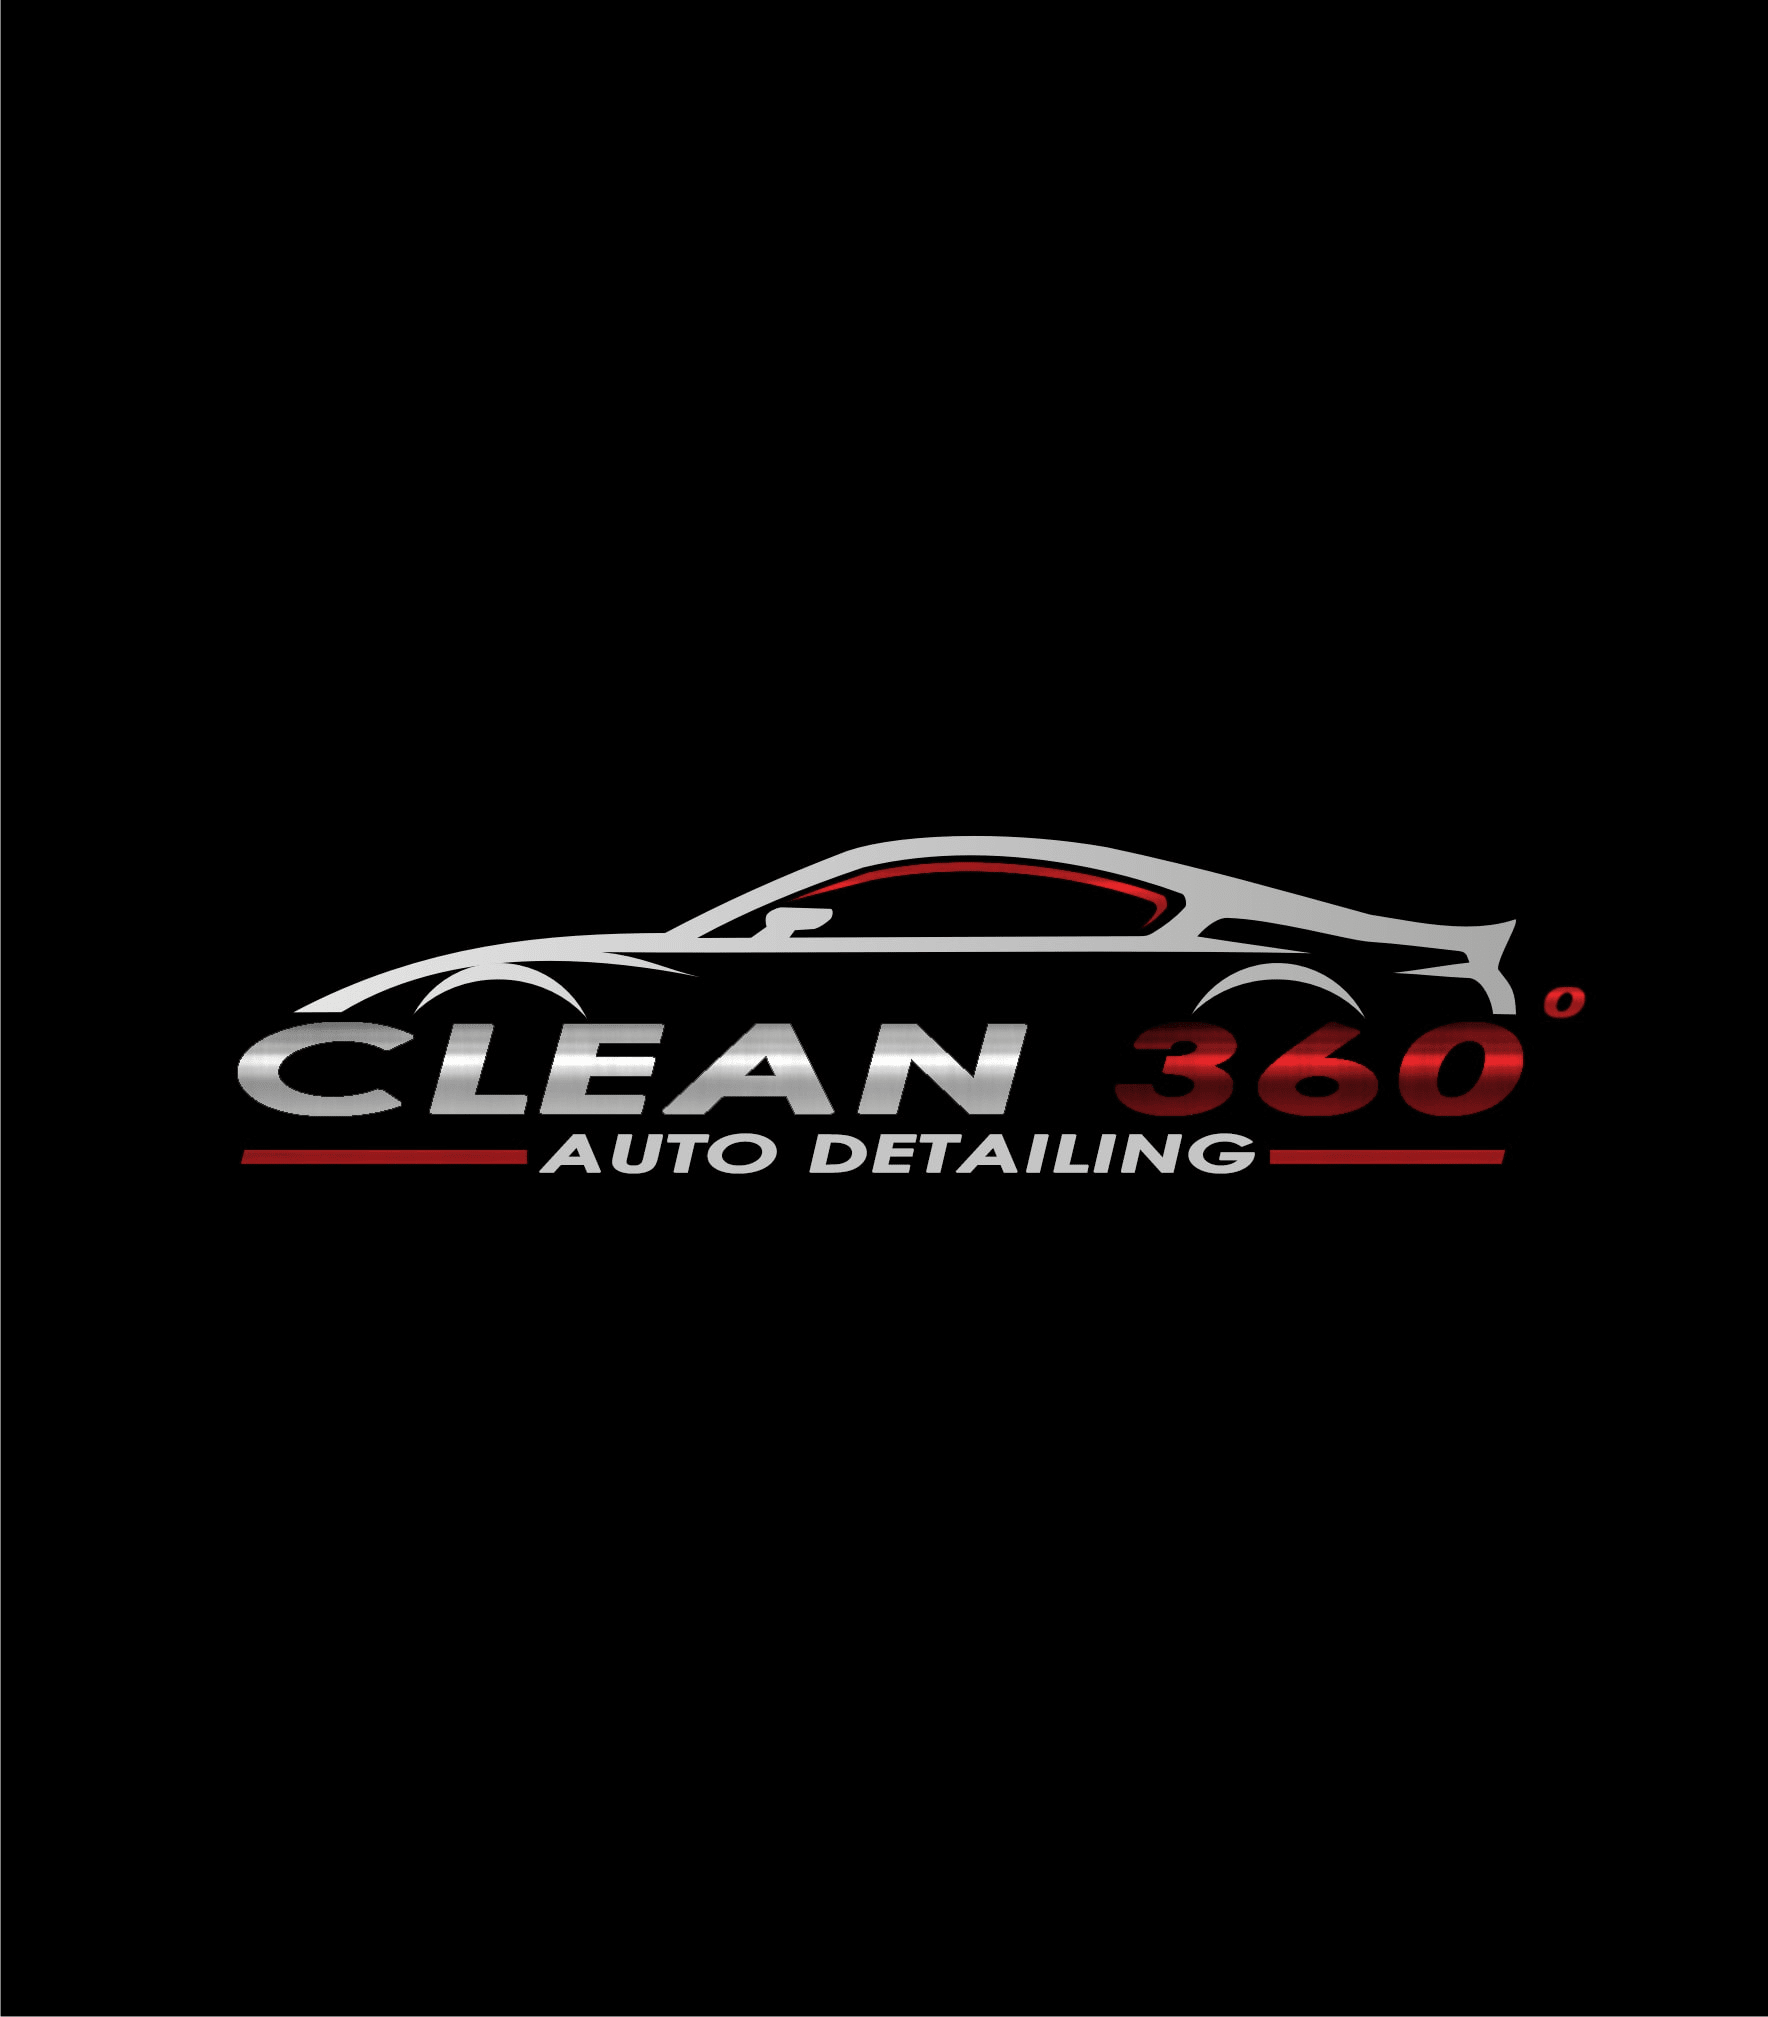 Clean 360 Auto Detailing